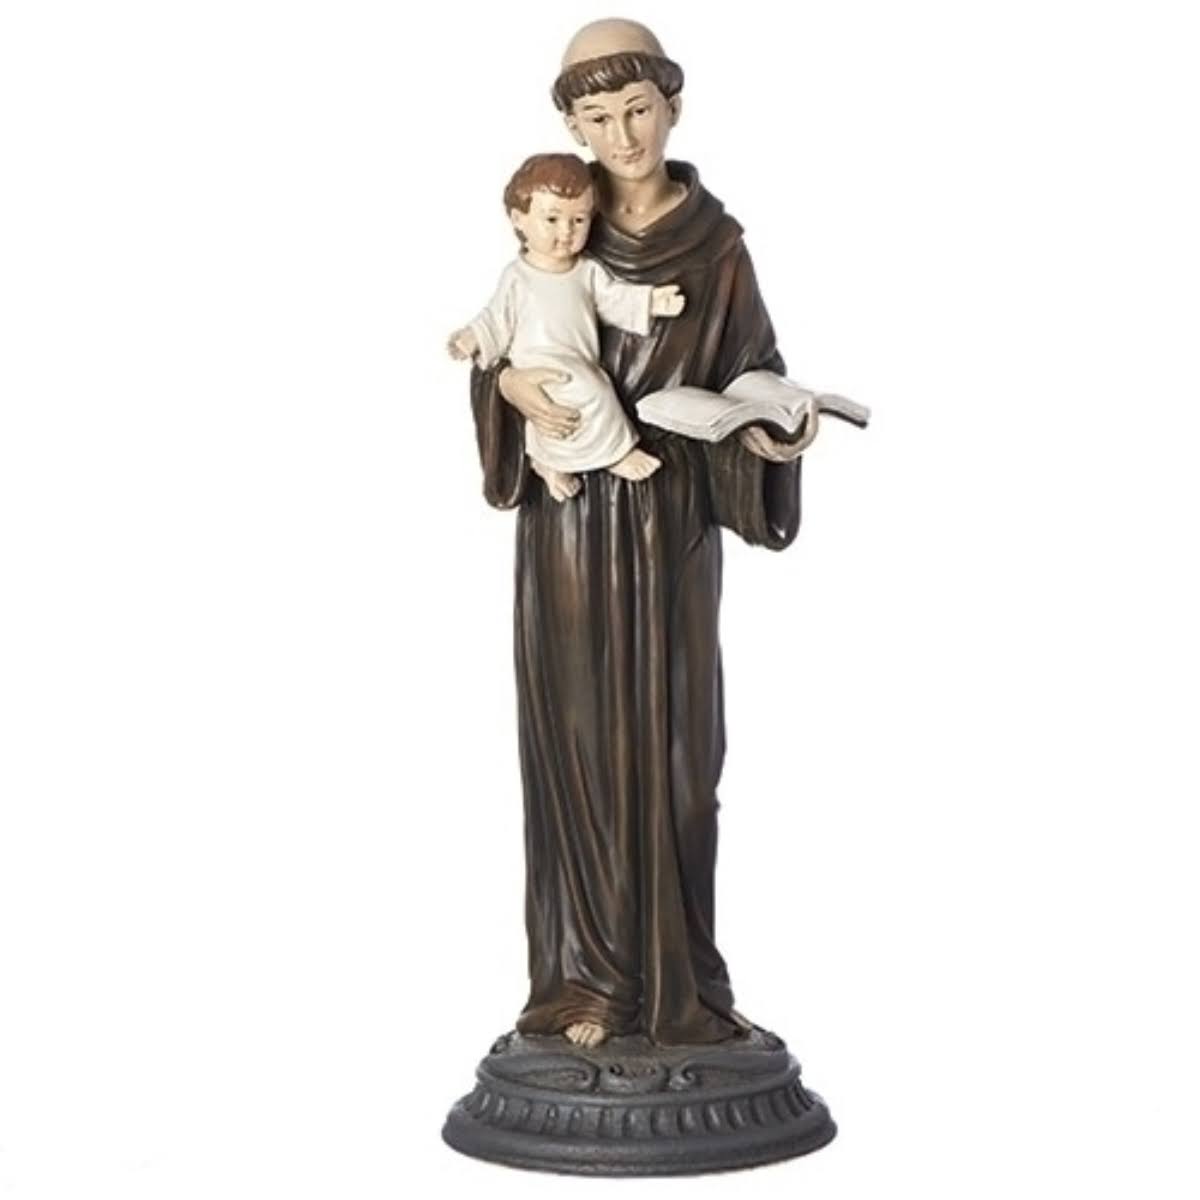 Roman 19.75" St. Anthony with Child Jesus Figurine Tabletop Decor